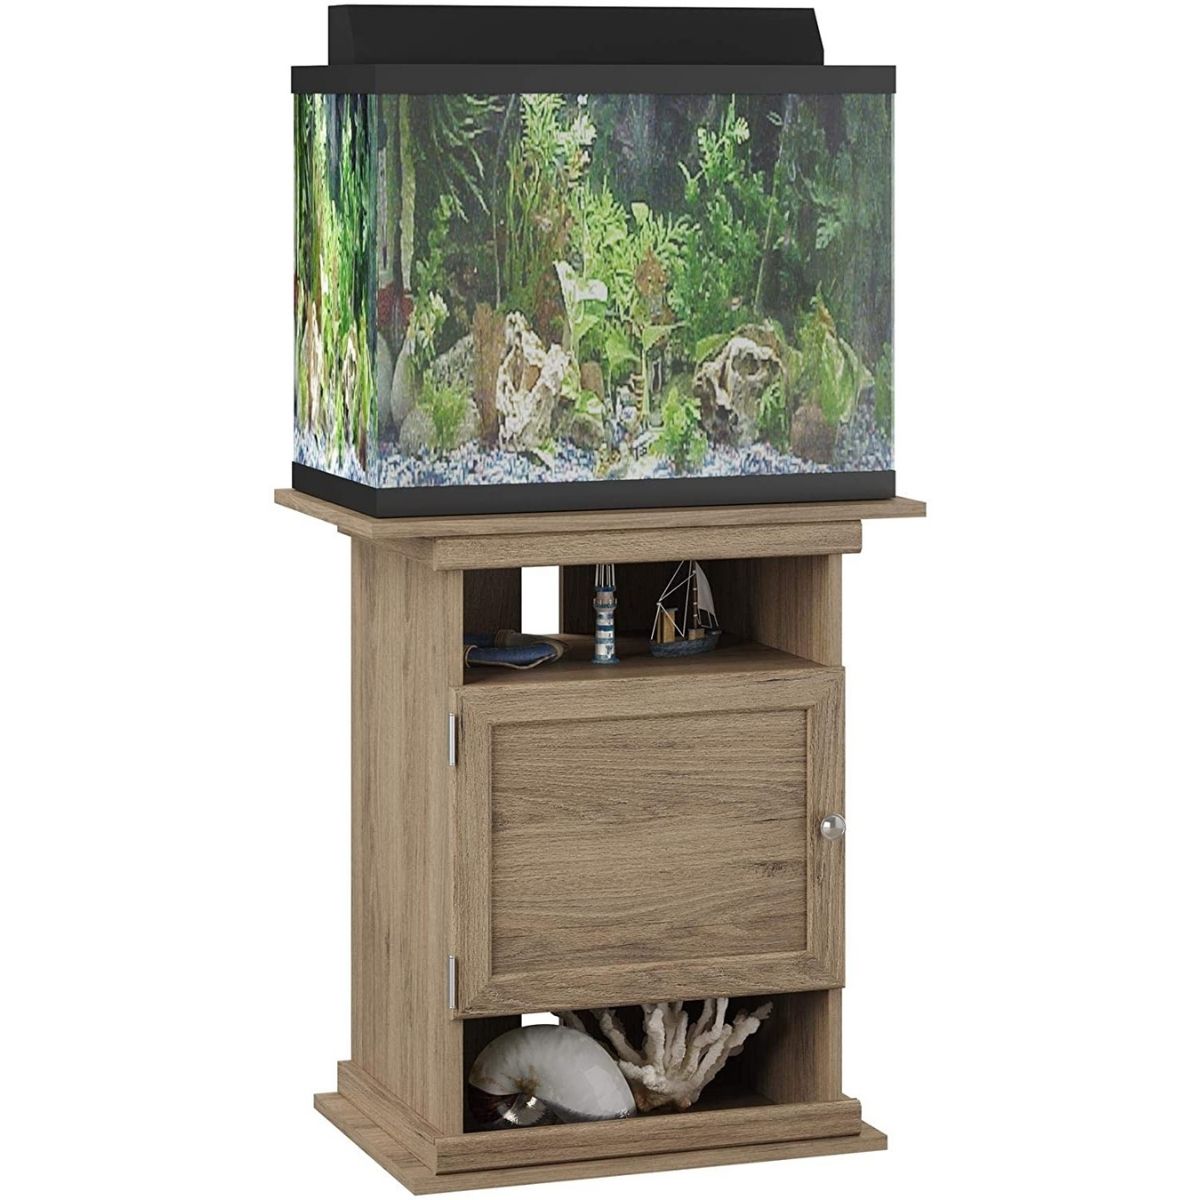 The Best 20 Gallon Fish Tank Stand Option: Flipper 10/20 Gallon Aquarium Stand